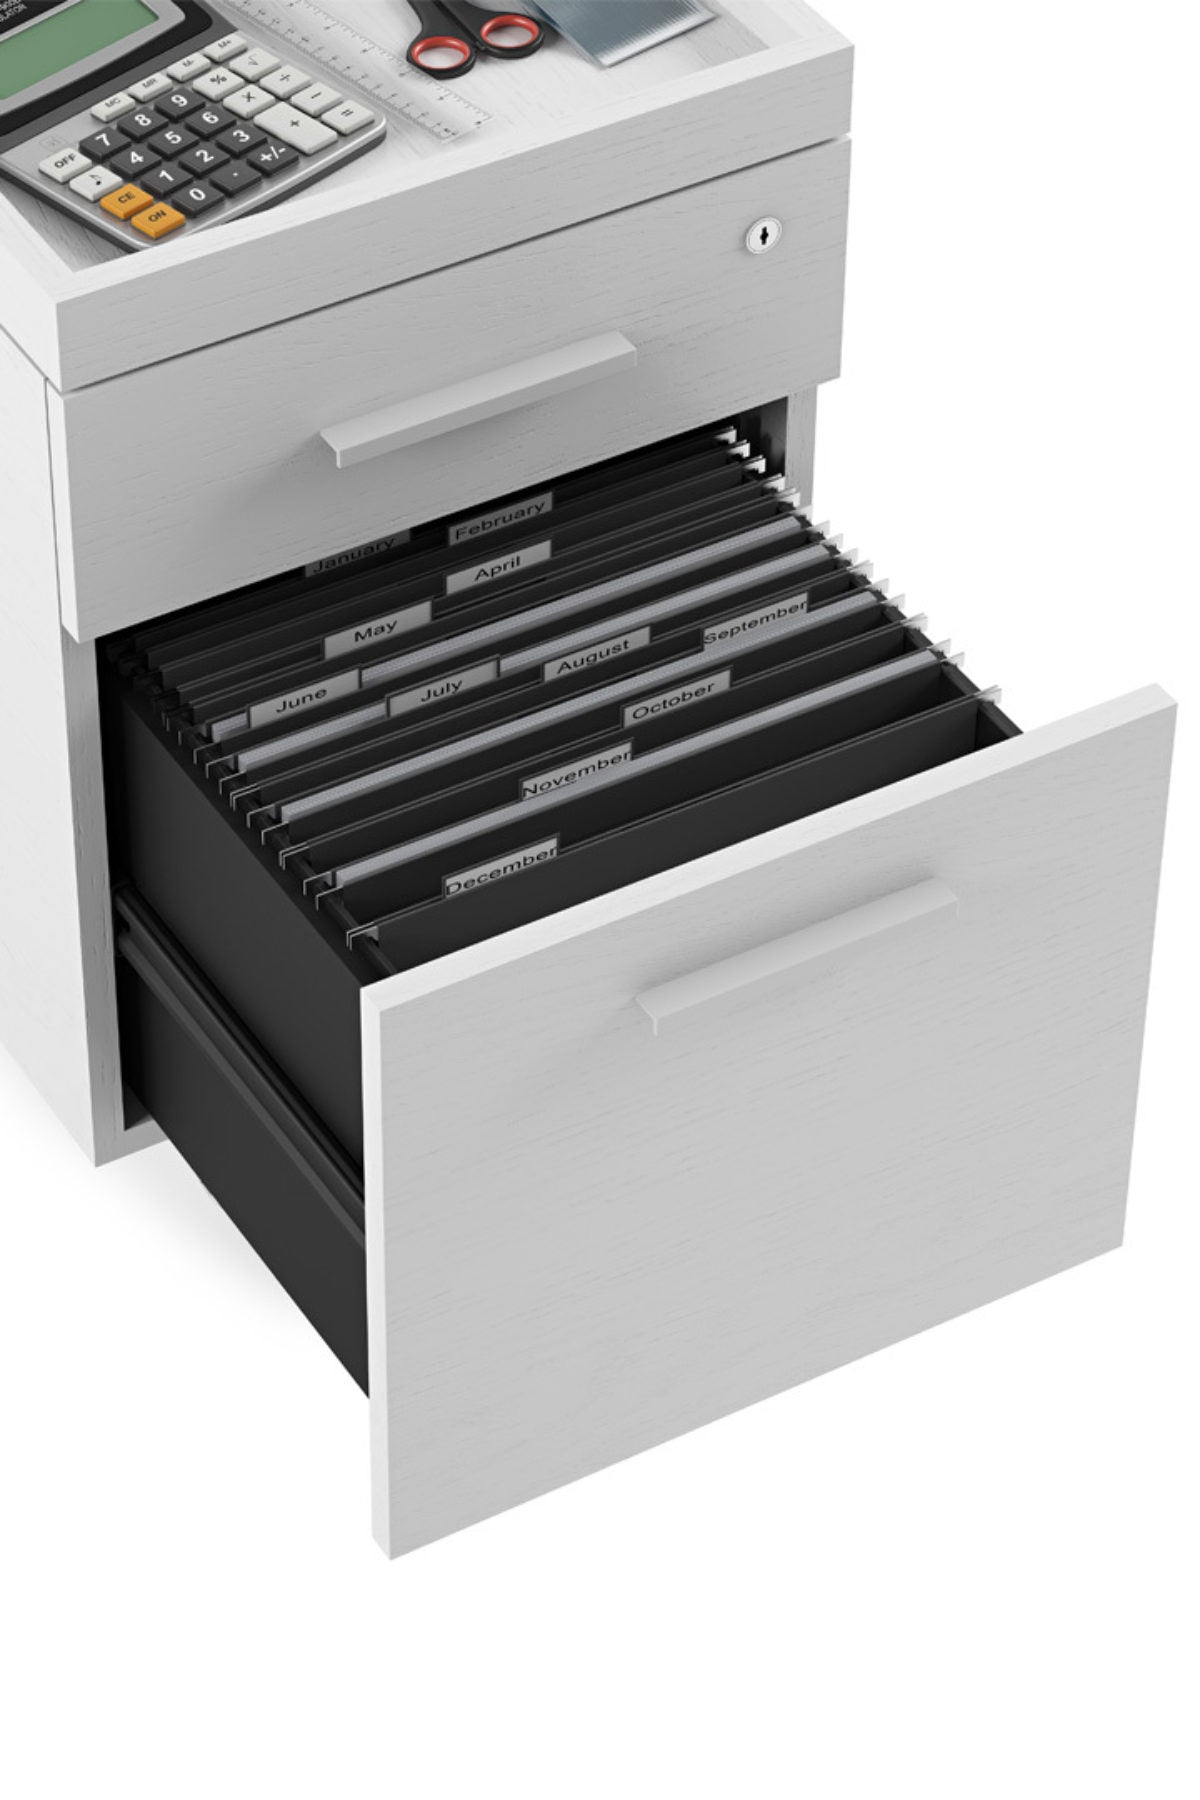 Satin White Oak Veneer & Satin White Steel | BDI Centro Mobile File Cabinet | Valley Ridge Furniture